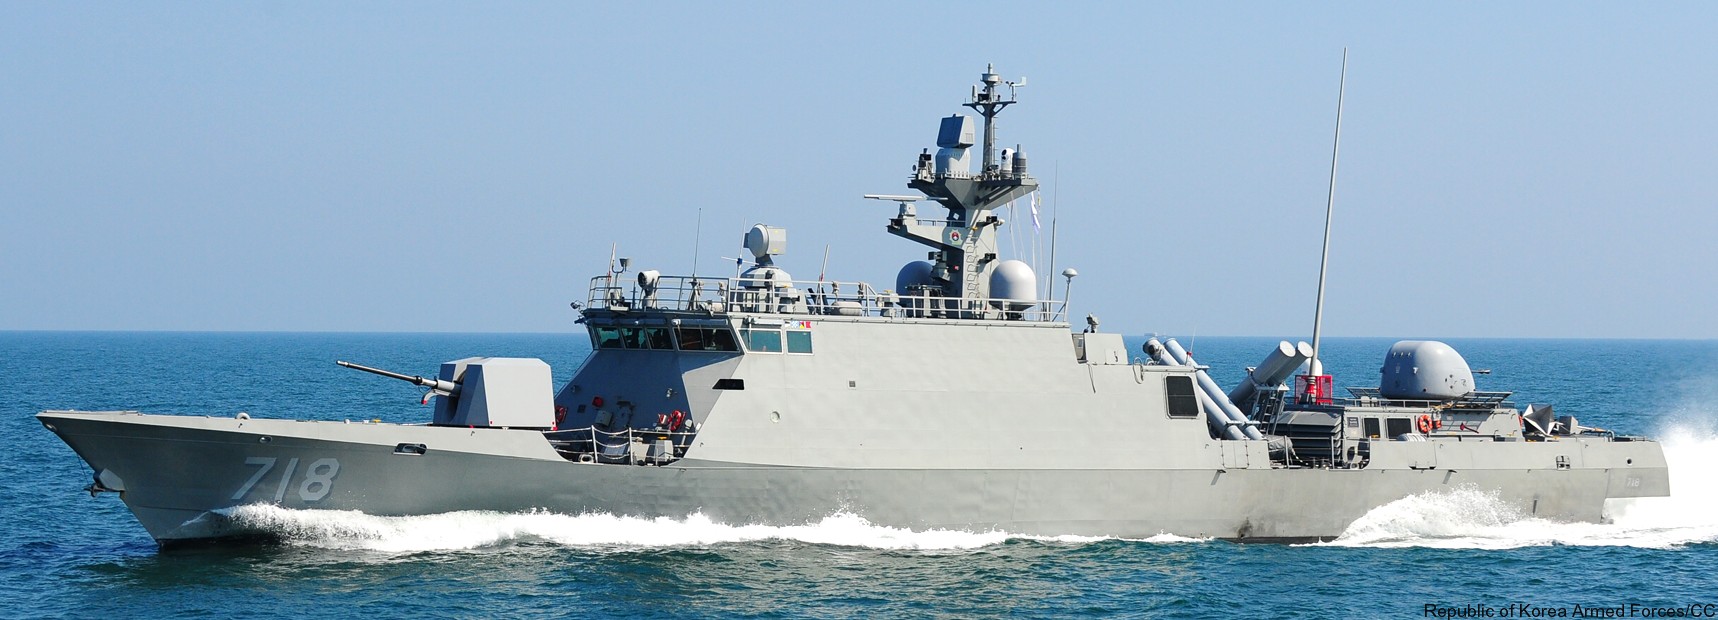 yoon youngha class patrol missile vessel boat pkg korean navy rokn roks hyundai wia 76mm gun nobong 40l70 gun ssm-700k 02x